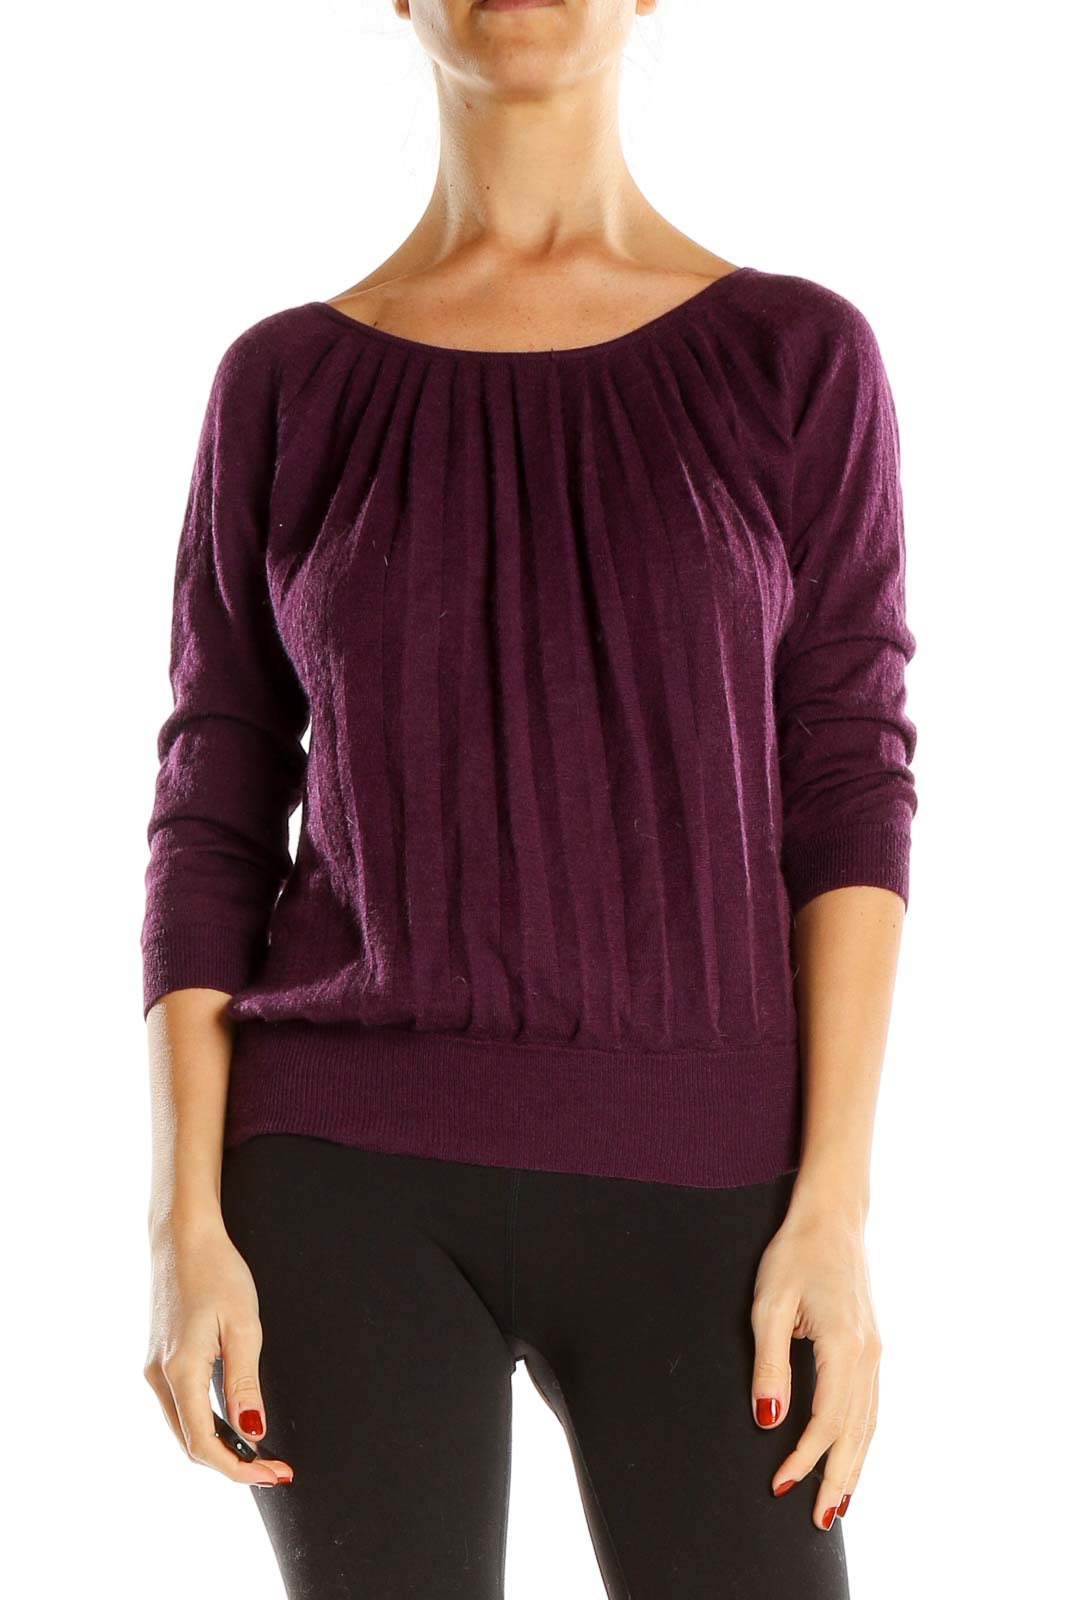 Purple Retro Sweater Top Front